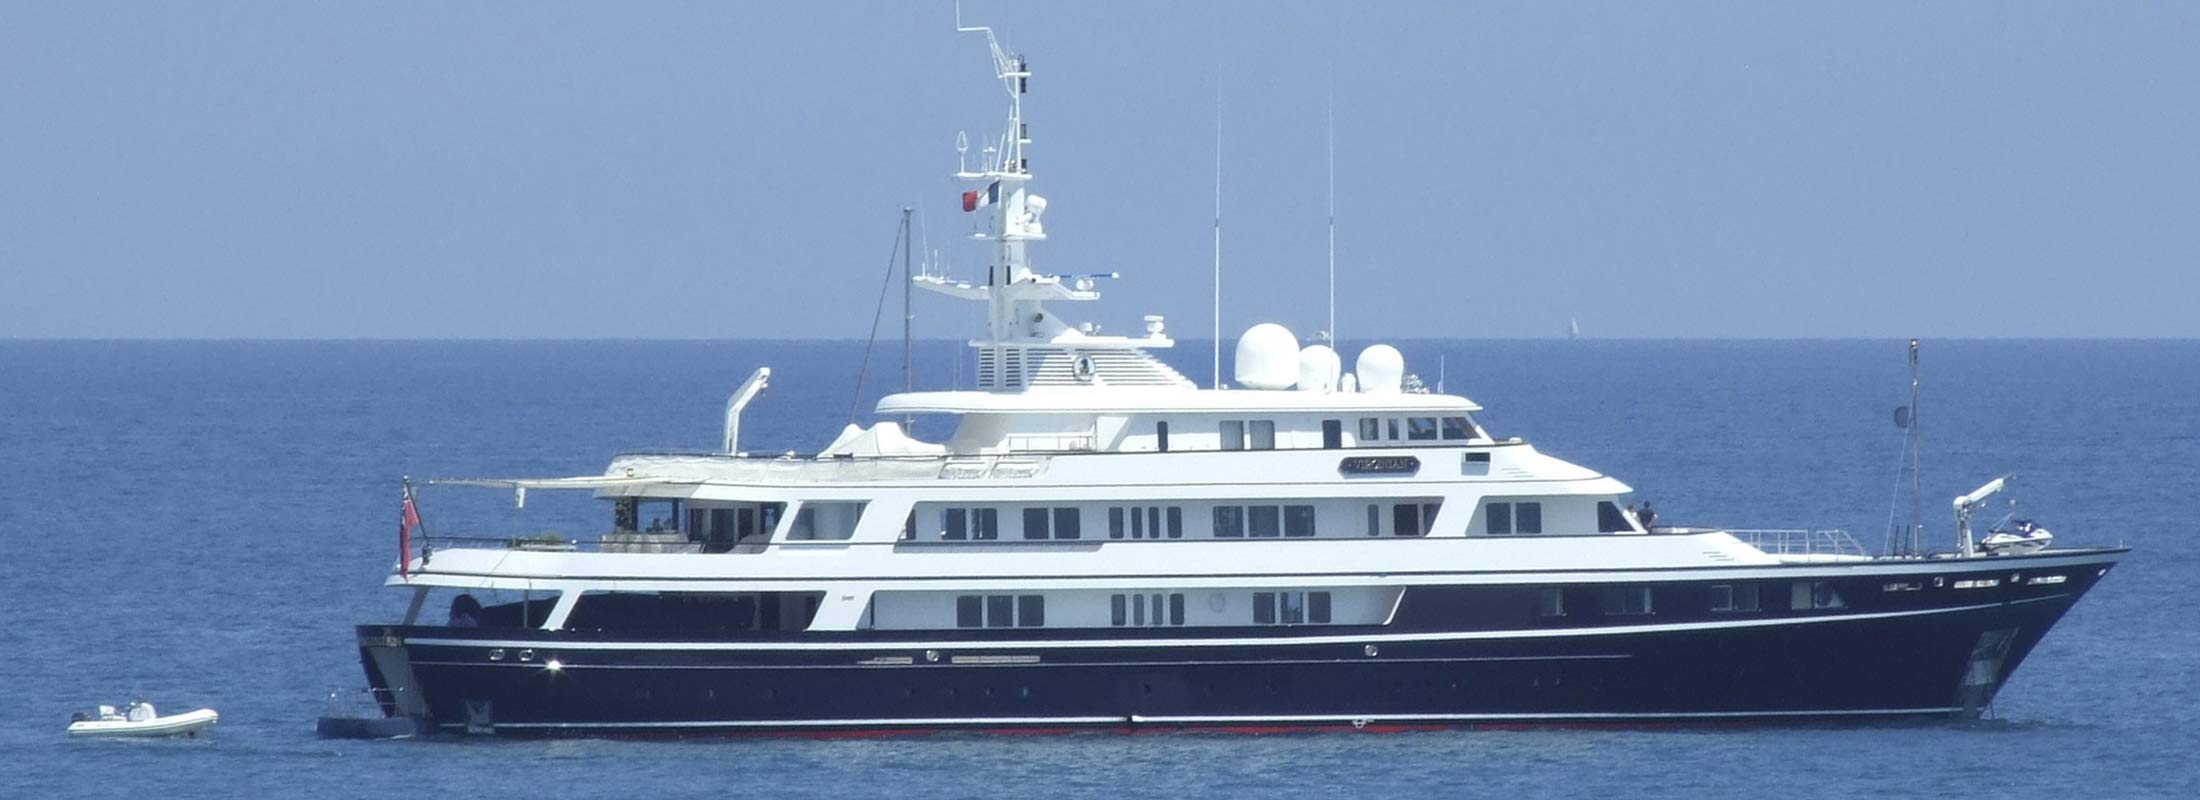 Virginian Motor Yacht for Charter Mediterranean slider 3